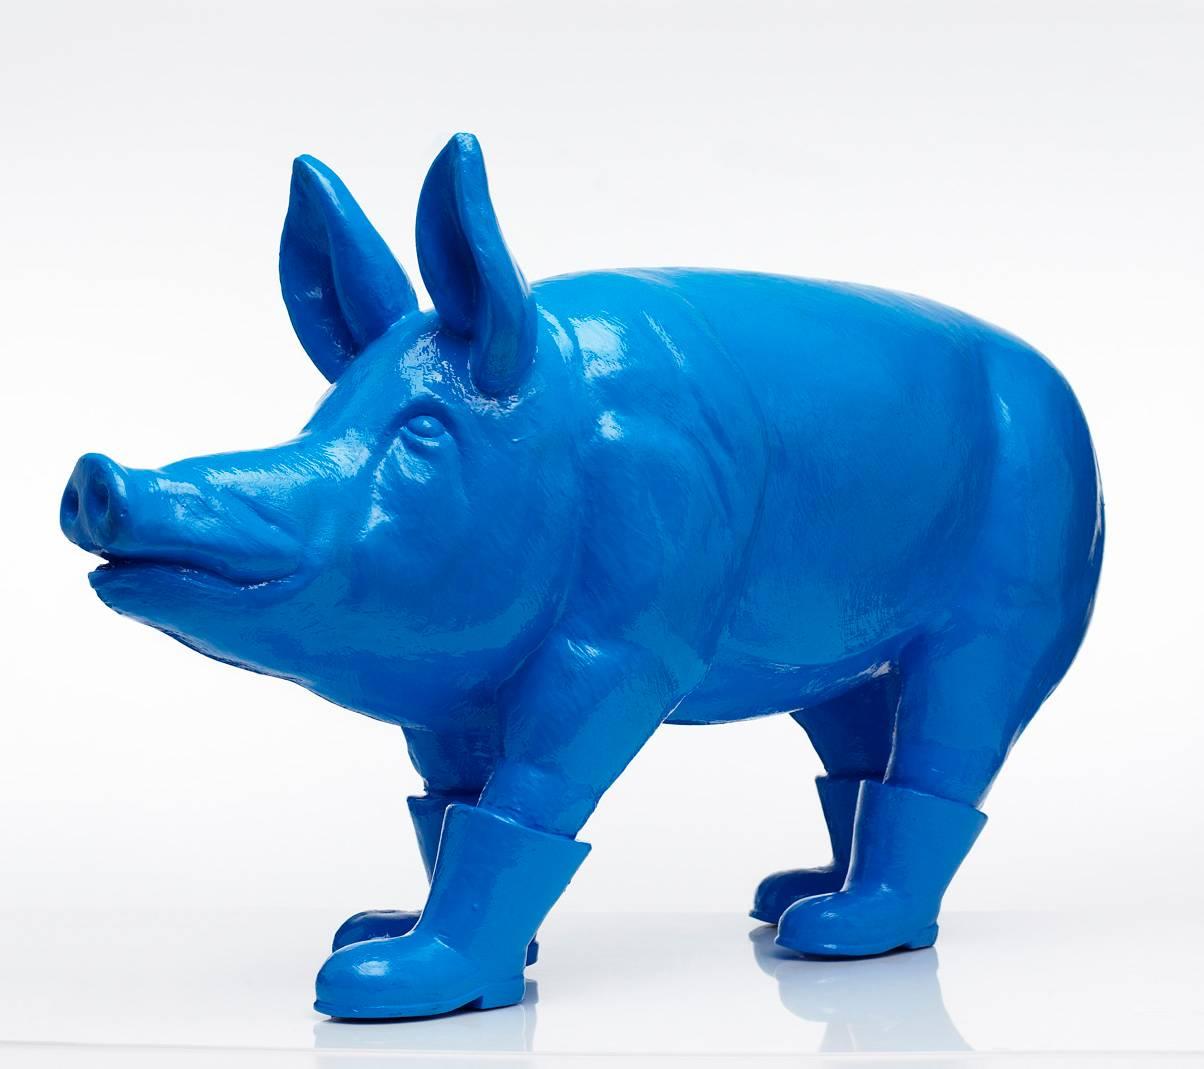 William Sweetlove Figurative Sculpture - Cloned blue father pig